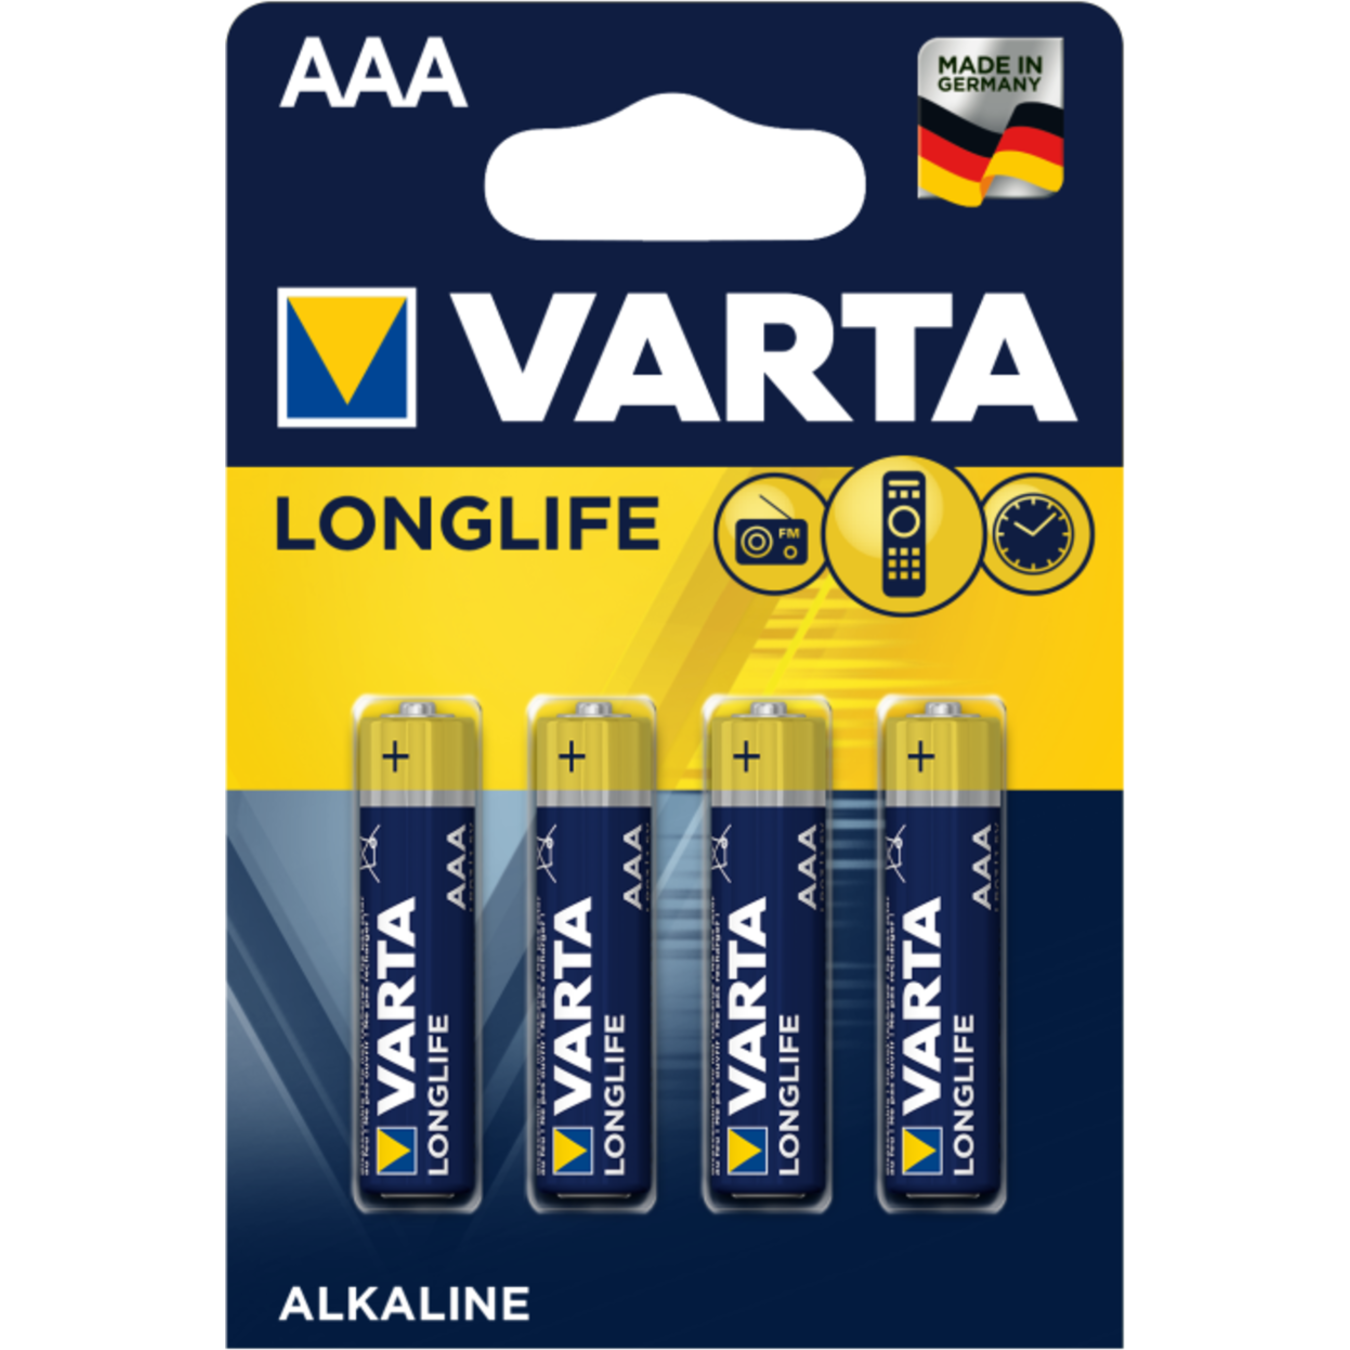 VARTA Longlife AAA BLI Alkaline Batteries 4pcs